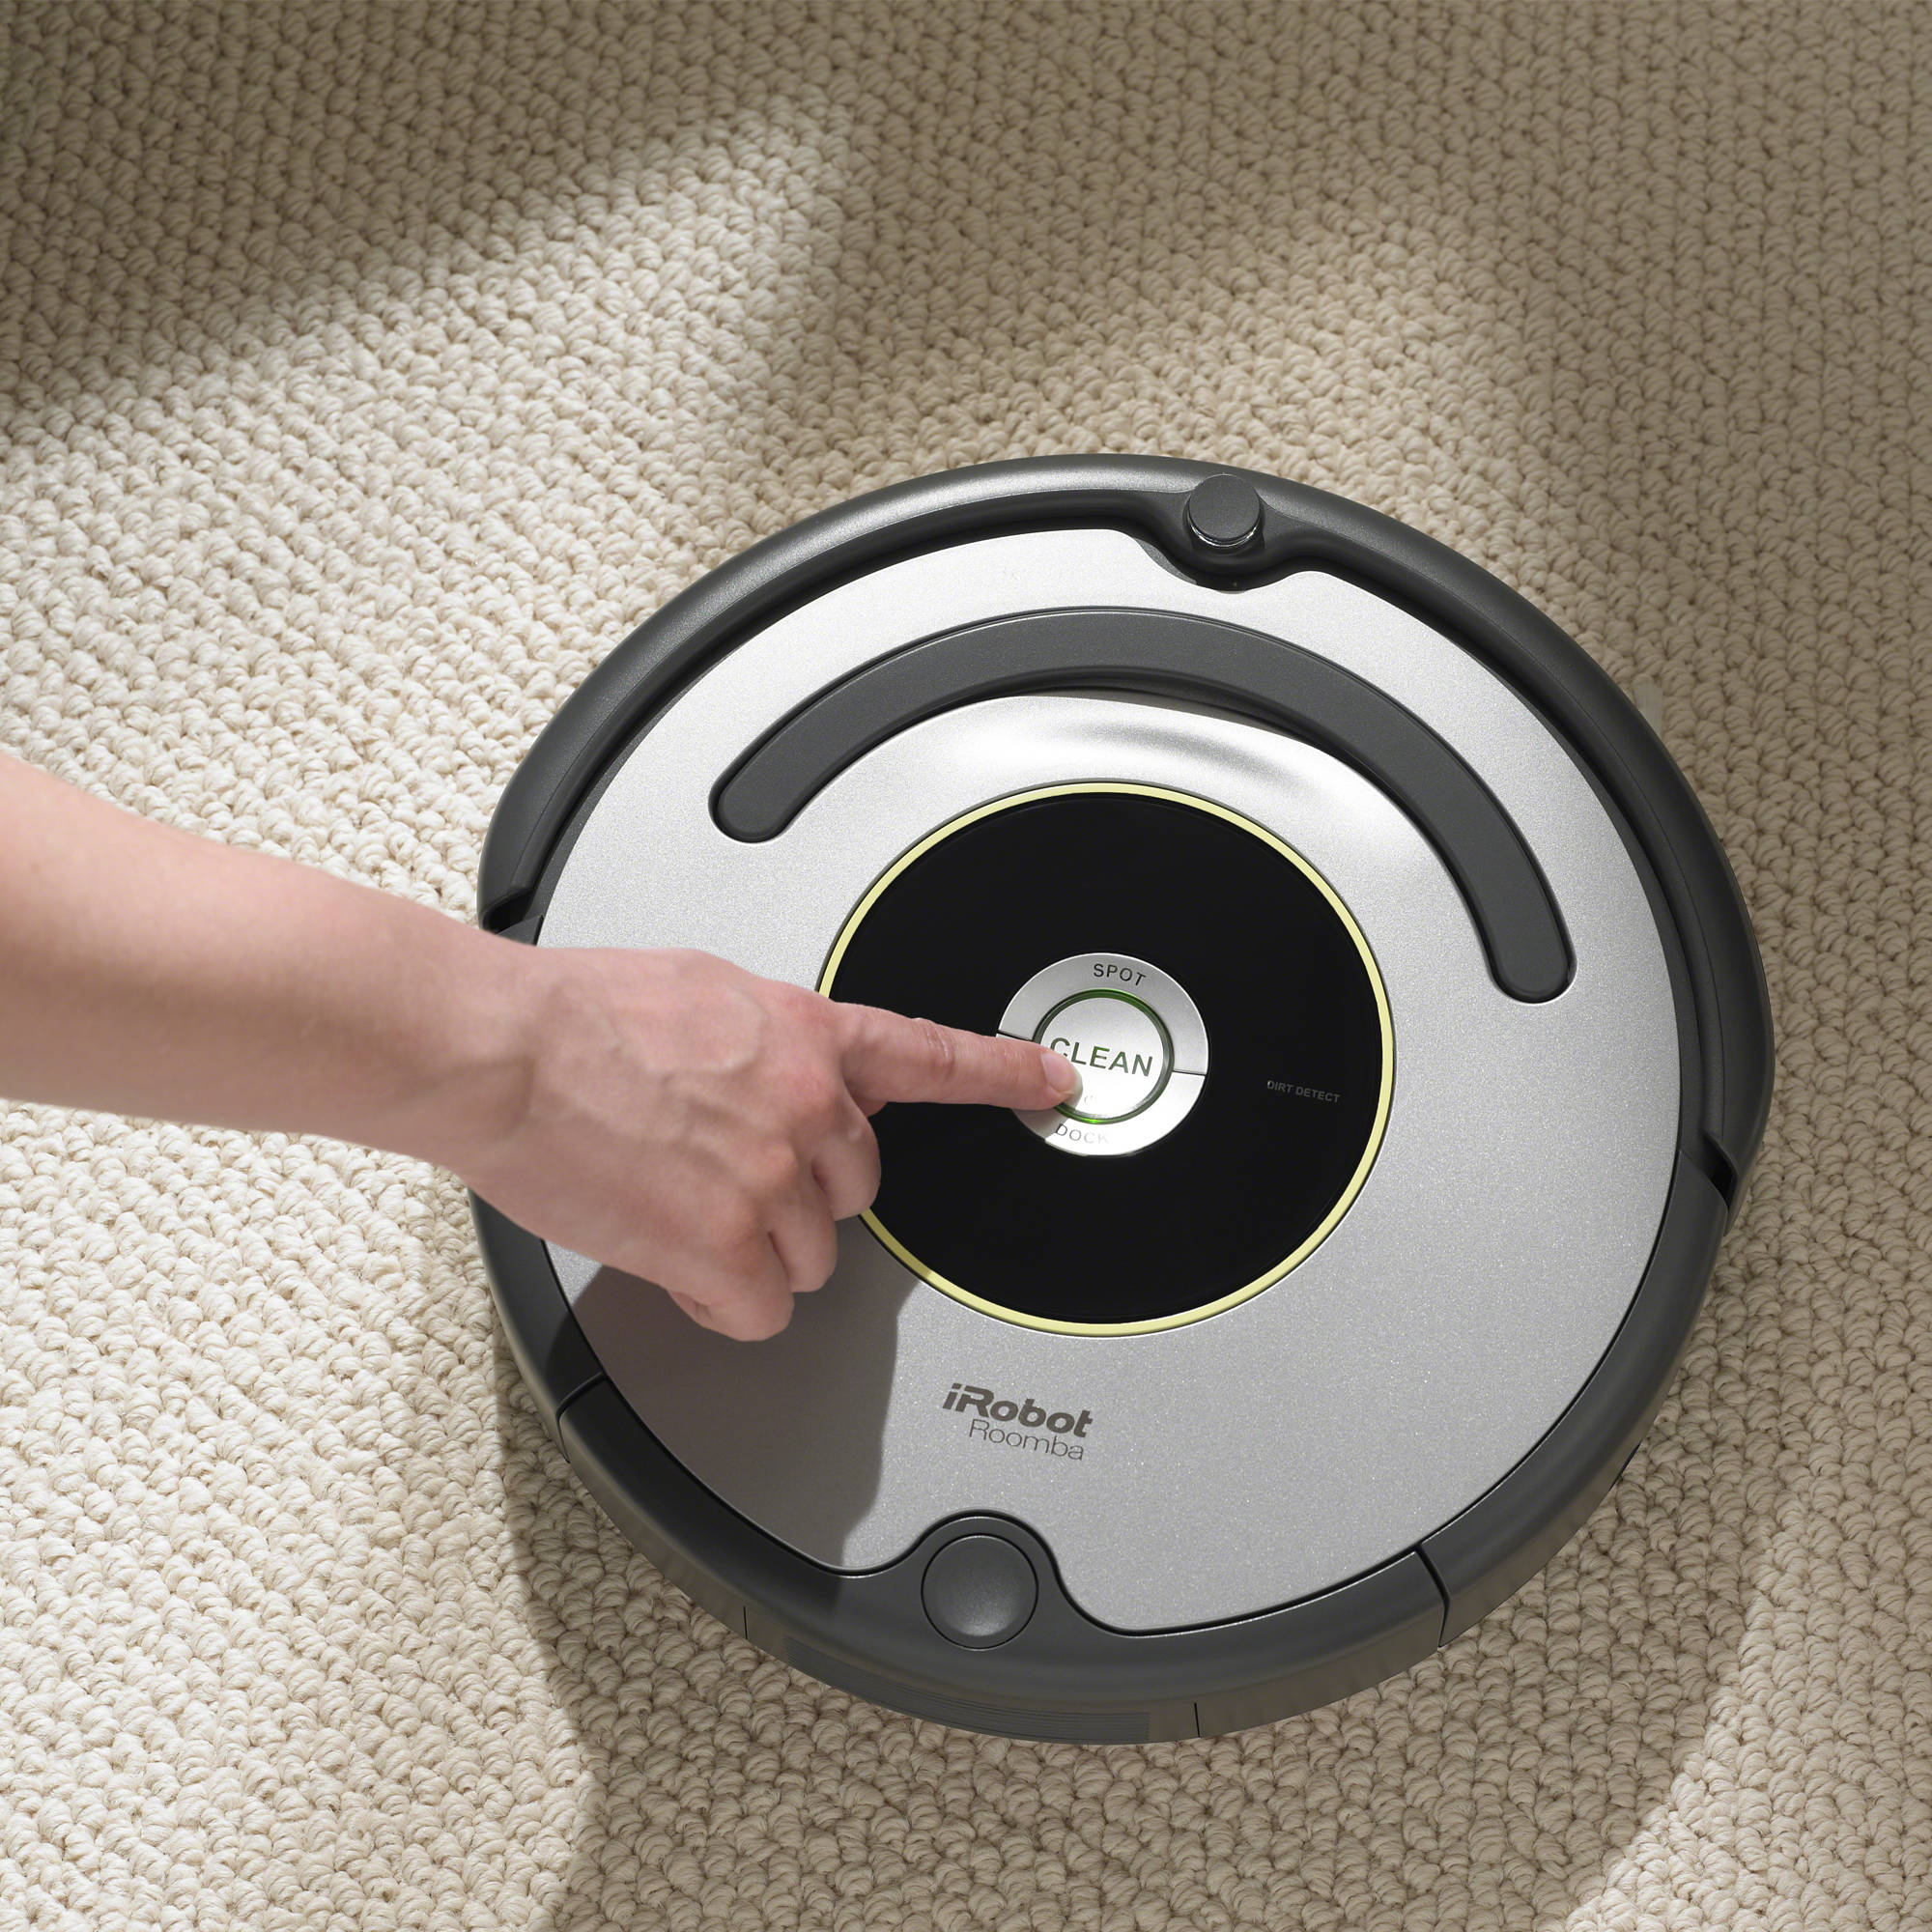 iRobot Roomba 618 Robot Vacuum - Good for Pet Hair, Carpets, Hard Floors, Self-Charging - image 5 of 6